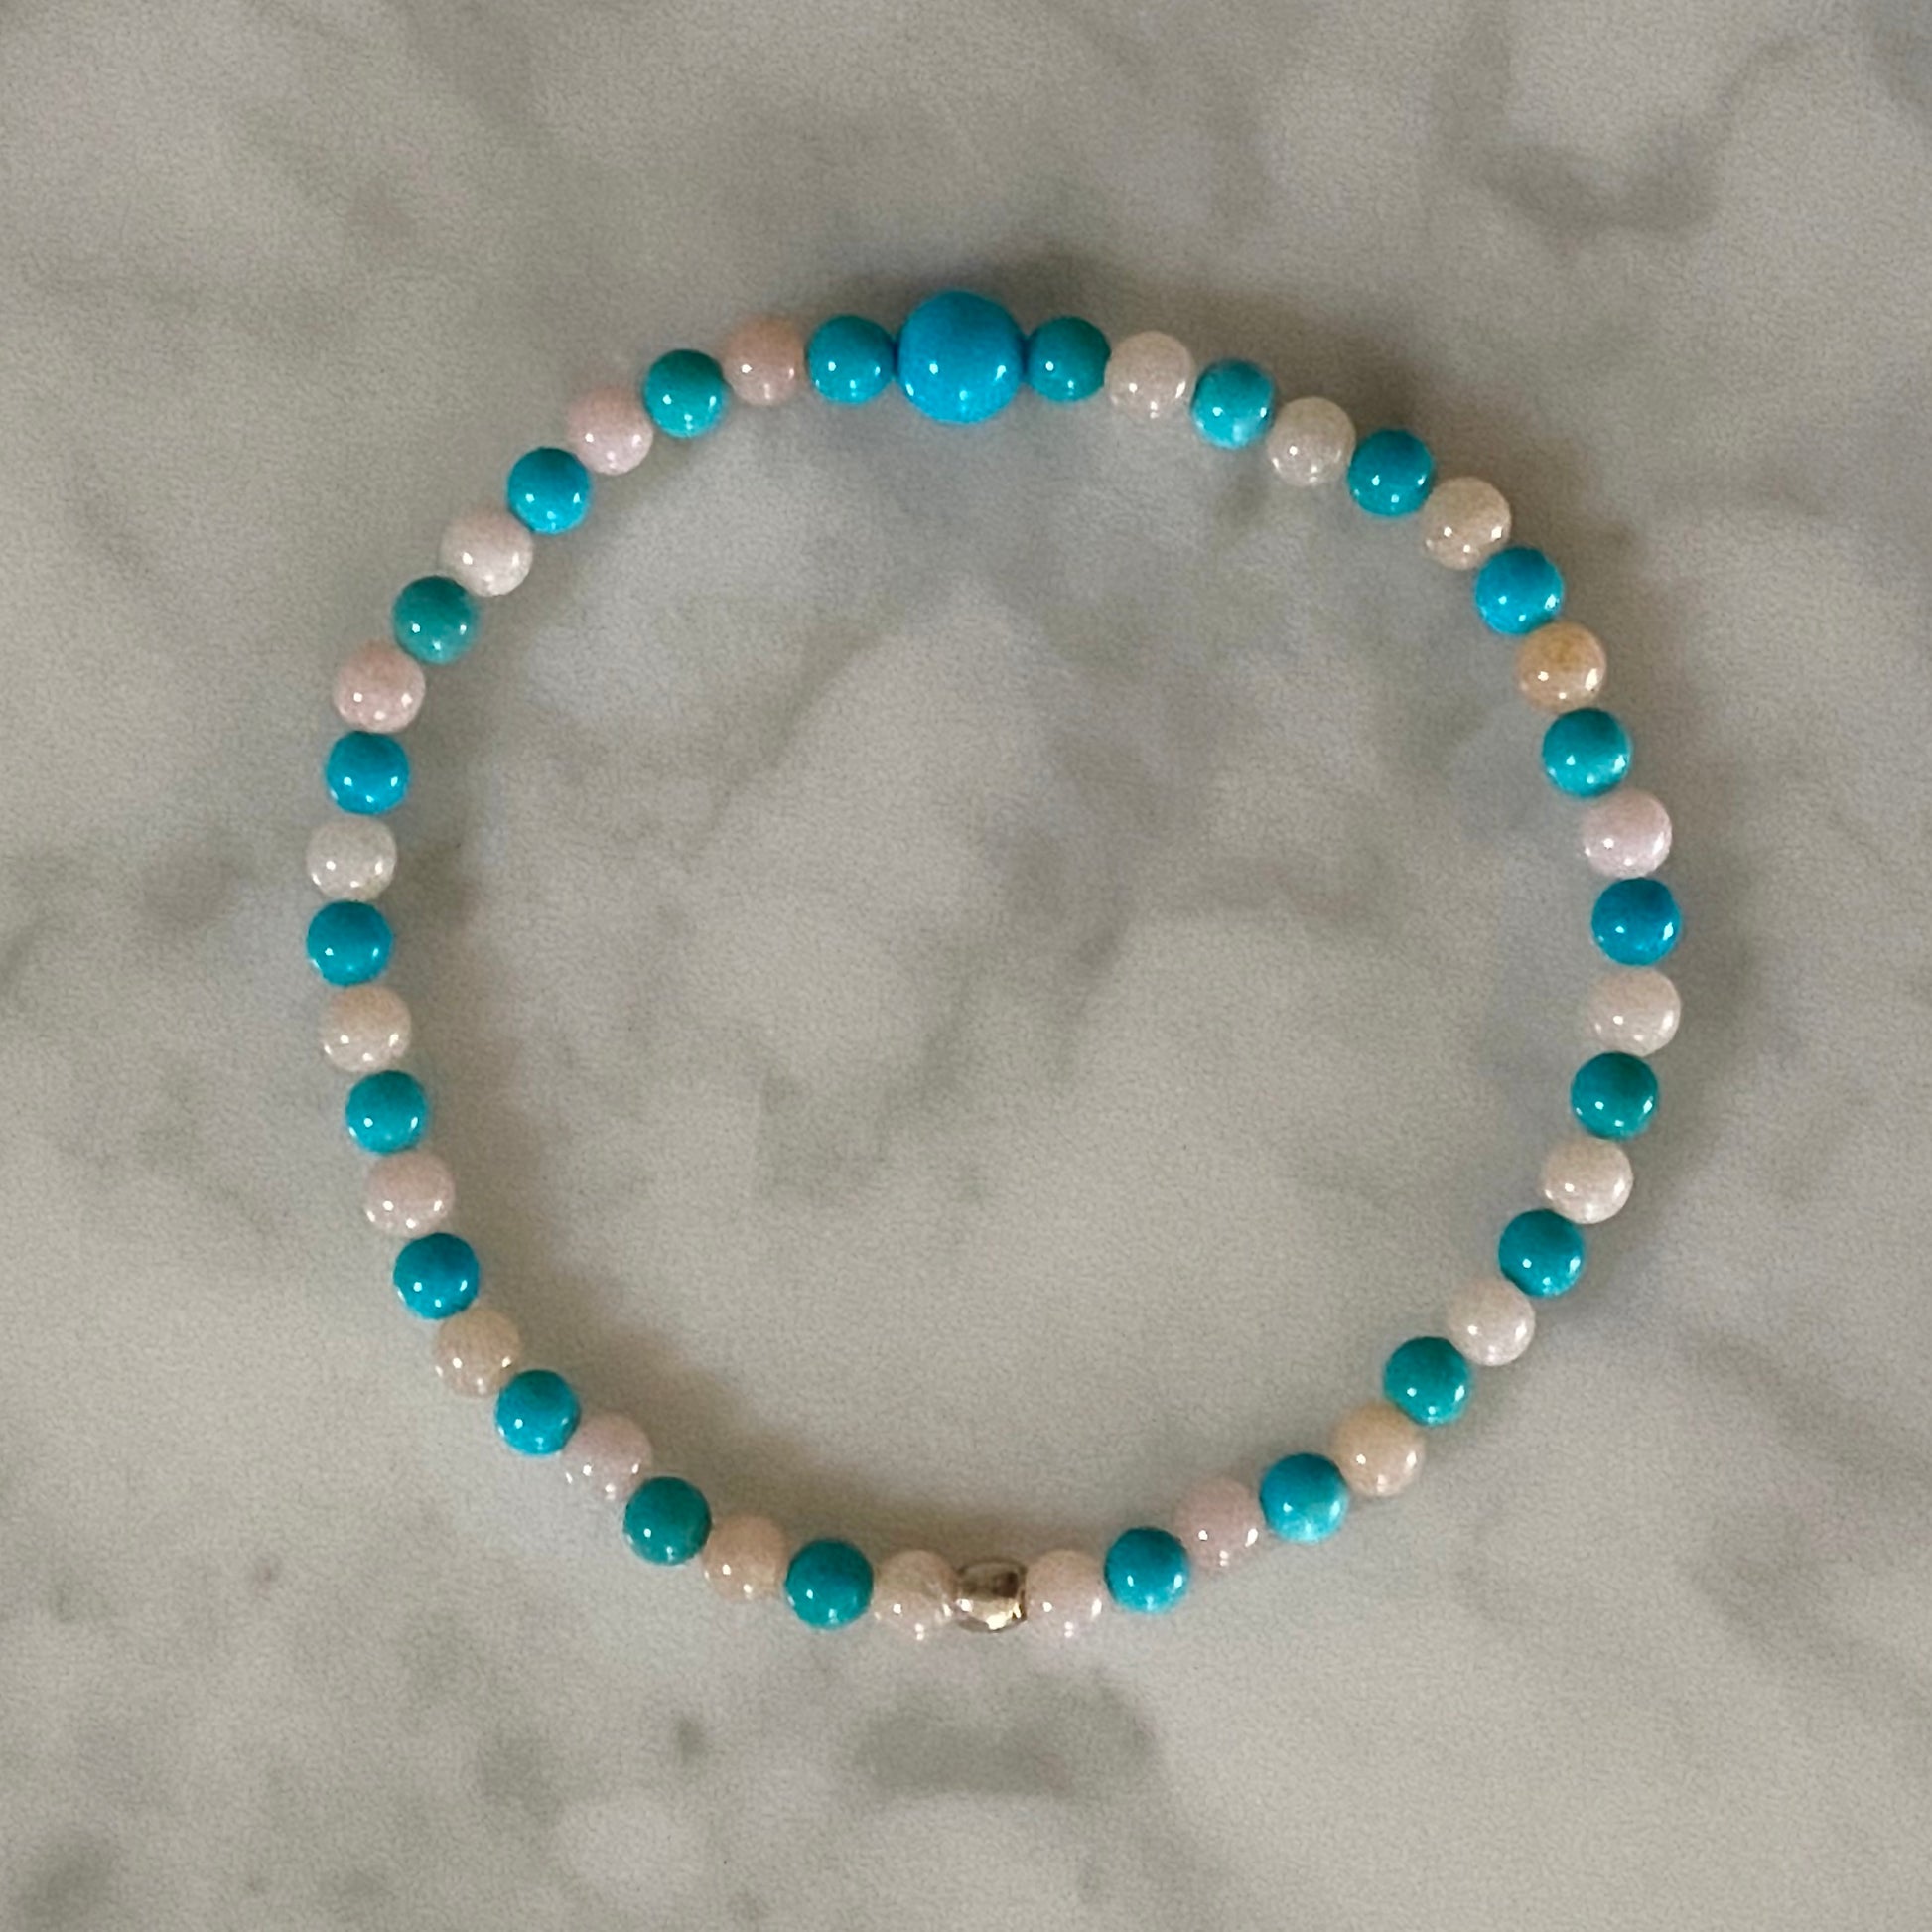 Arpaia pink Peruvian opal & sleeping beauty turquoise bead stretch bracelet.